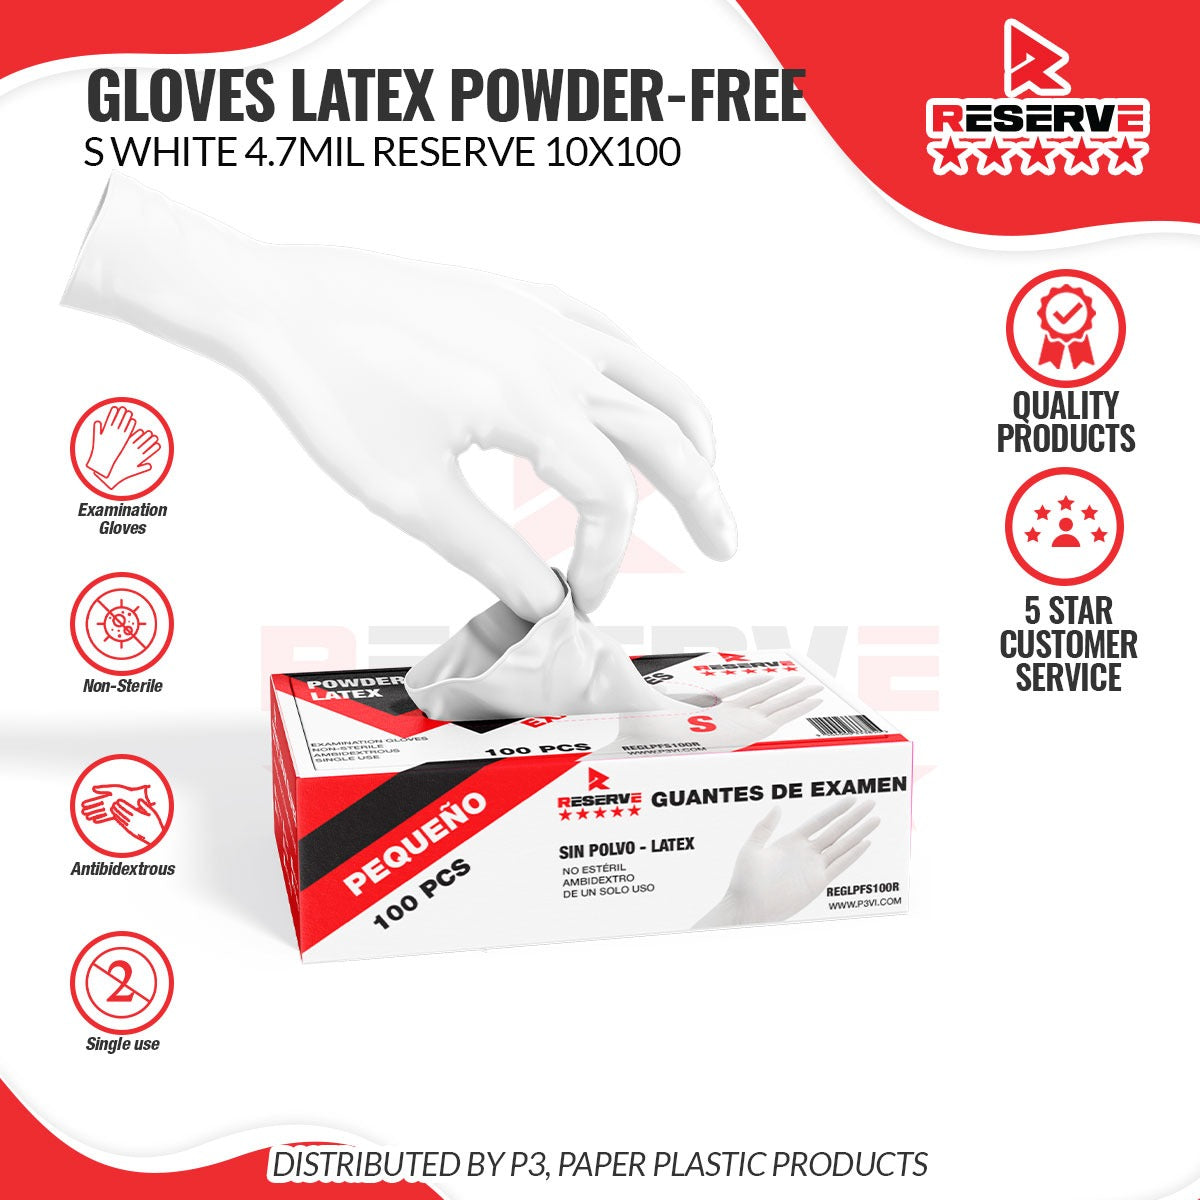 Gloves Latex Powder-Free S White 4.7mil Reserve 10/100